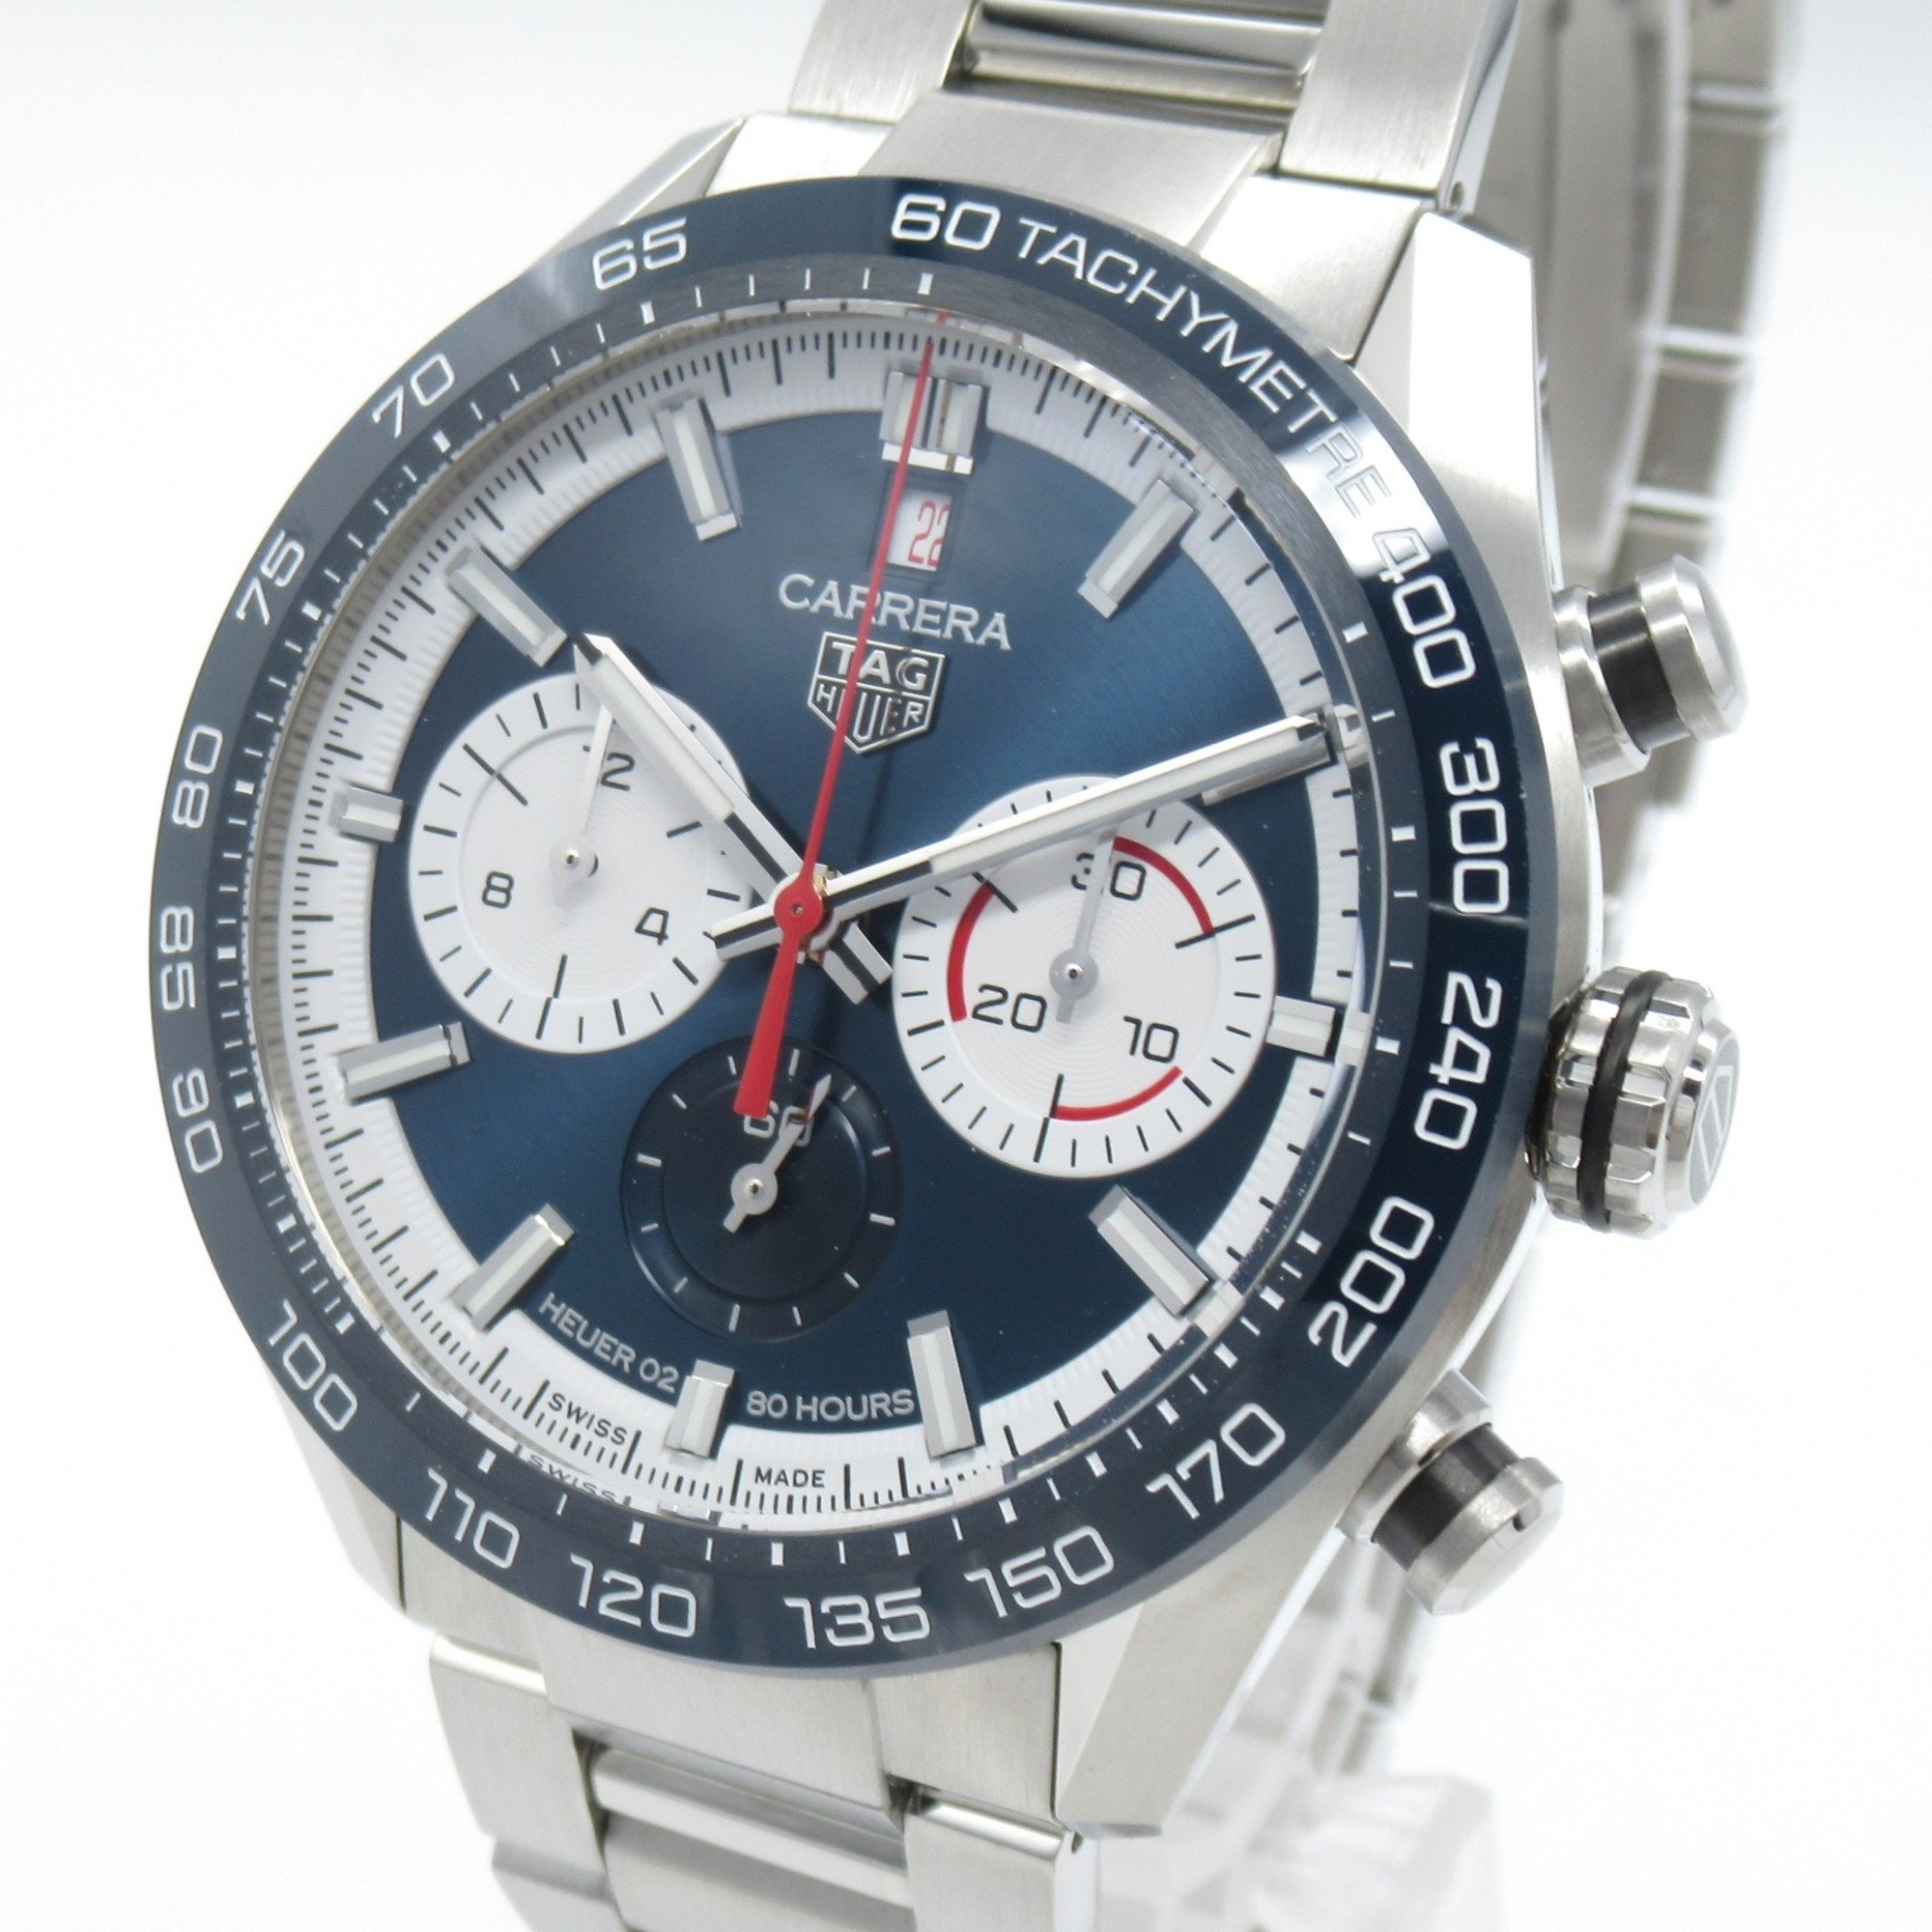 TAG HEUER Carrera Sports Chronograph 160th Anniversary Model Wrist Watch Watch Wrist Watch CBN2A1E.BA0643 Mechanical Aut CBN2A1E.BA0643